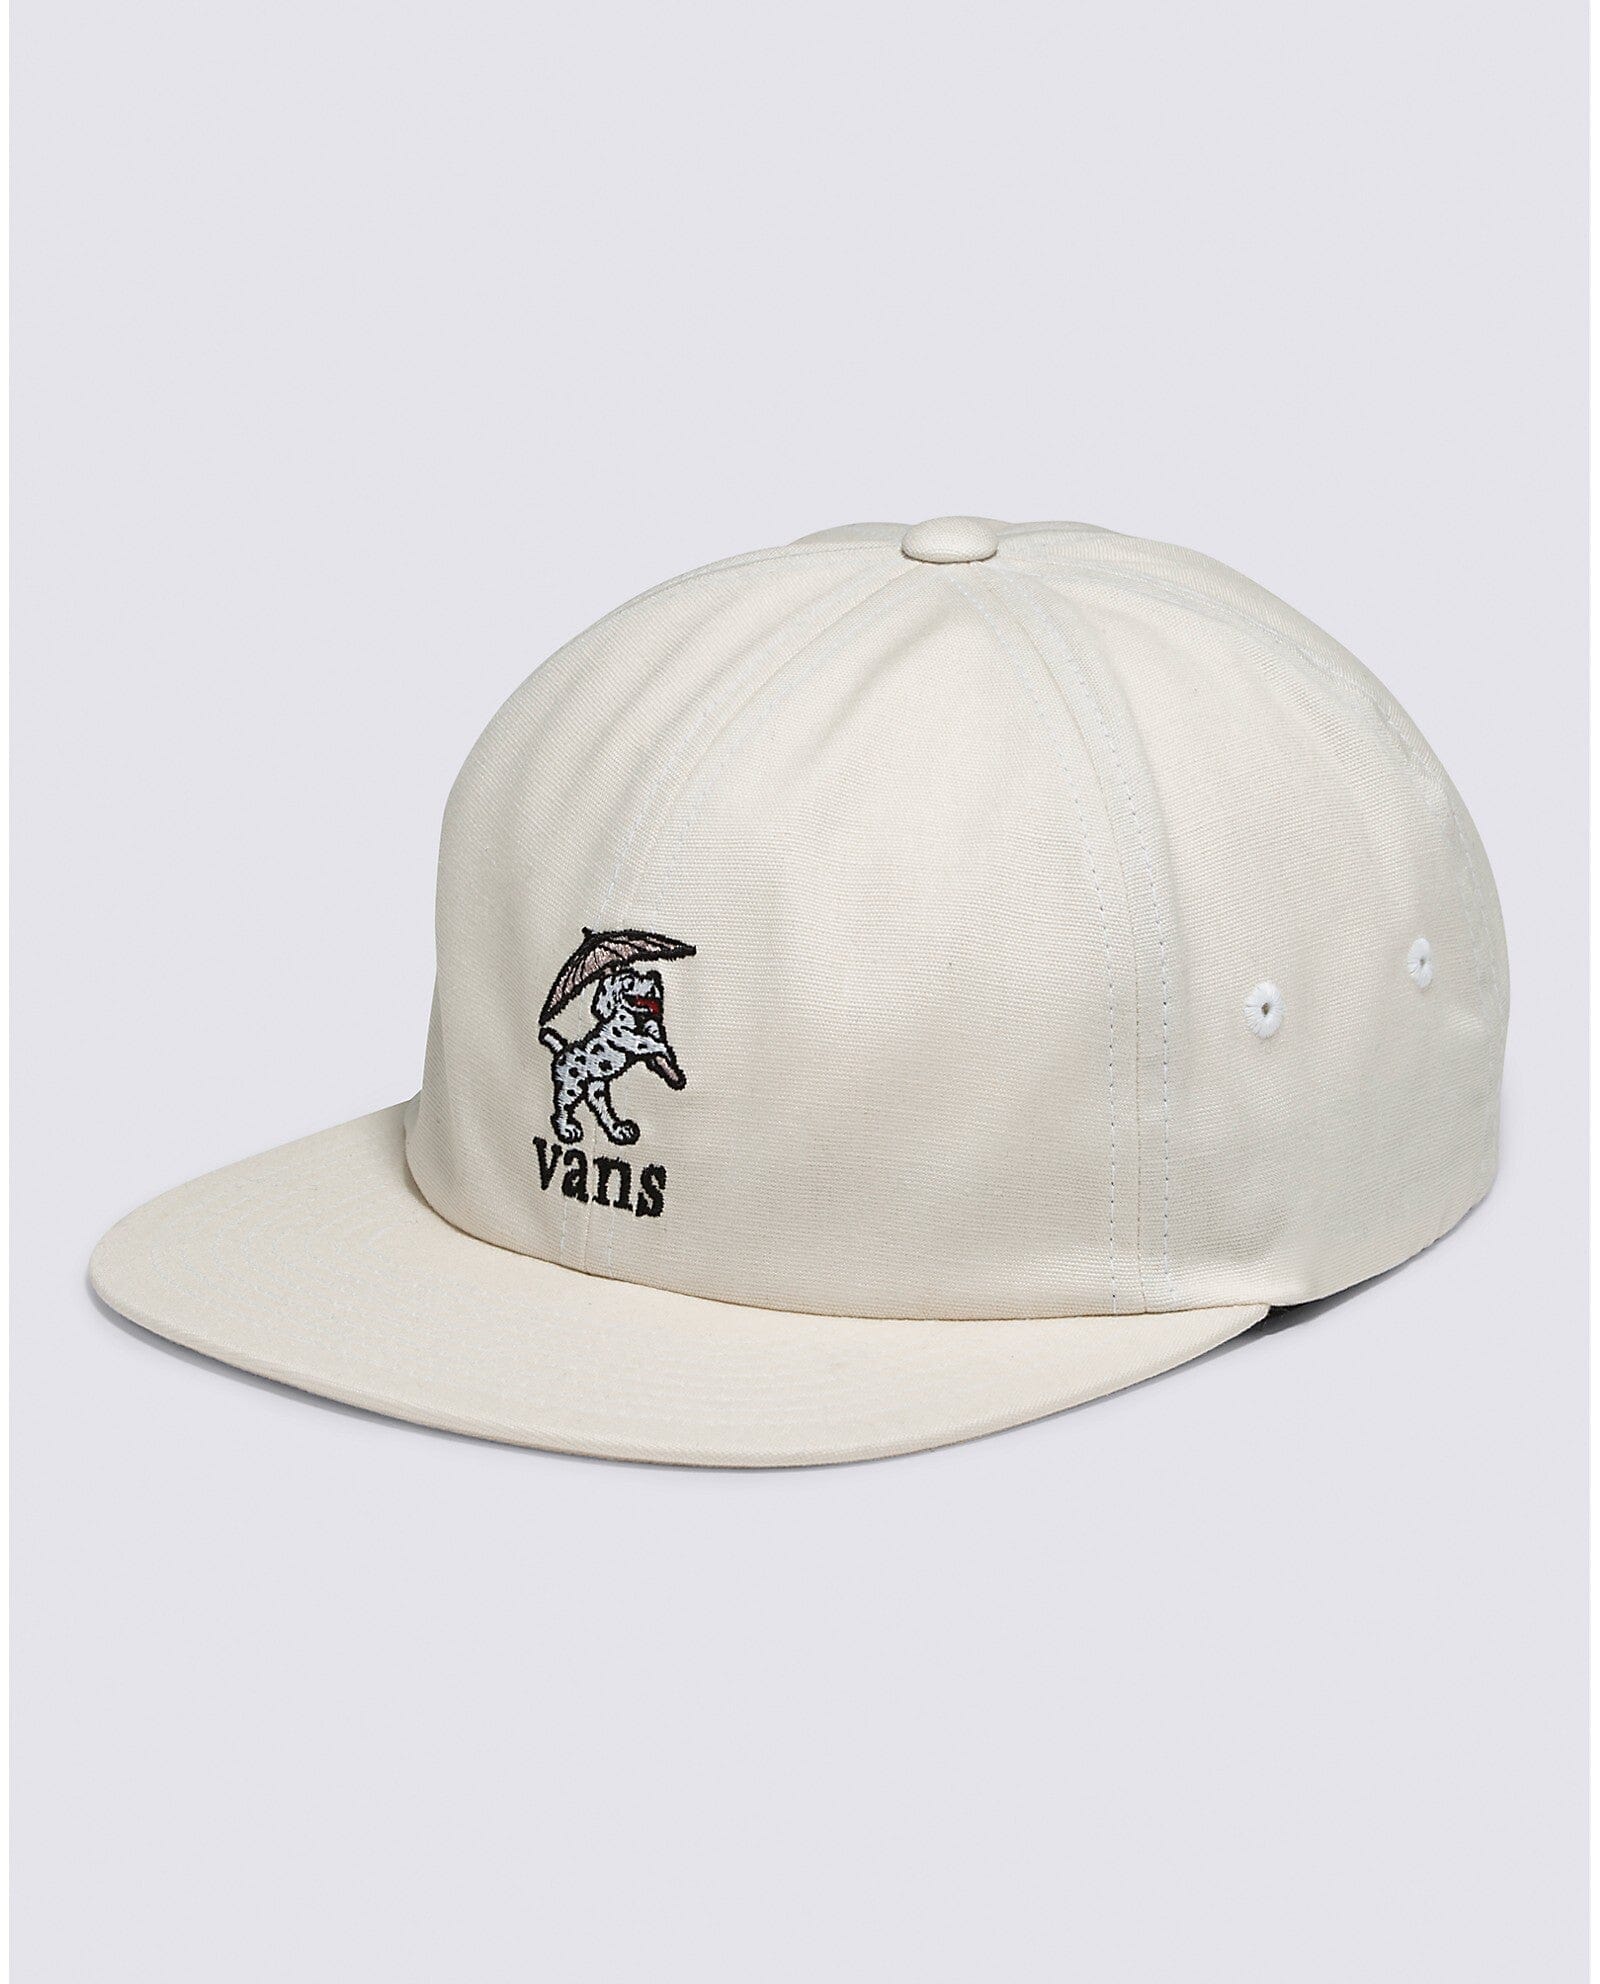 VANS Skate Dog Jockey Hat Natural Men's Hats Vans 